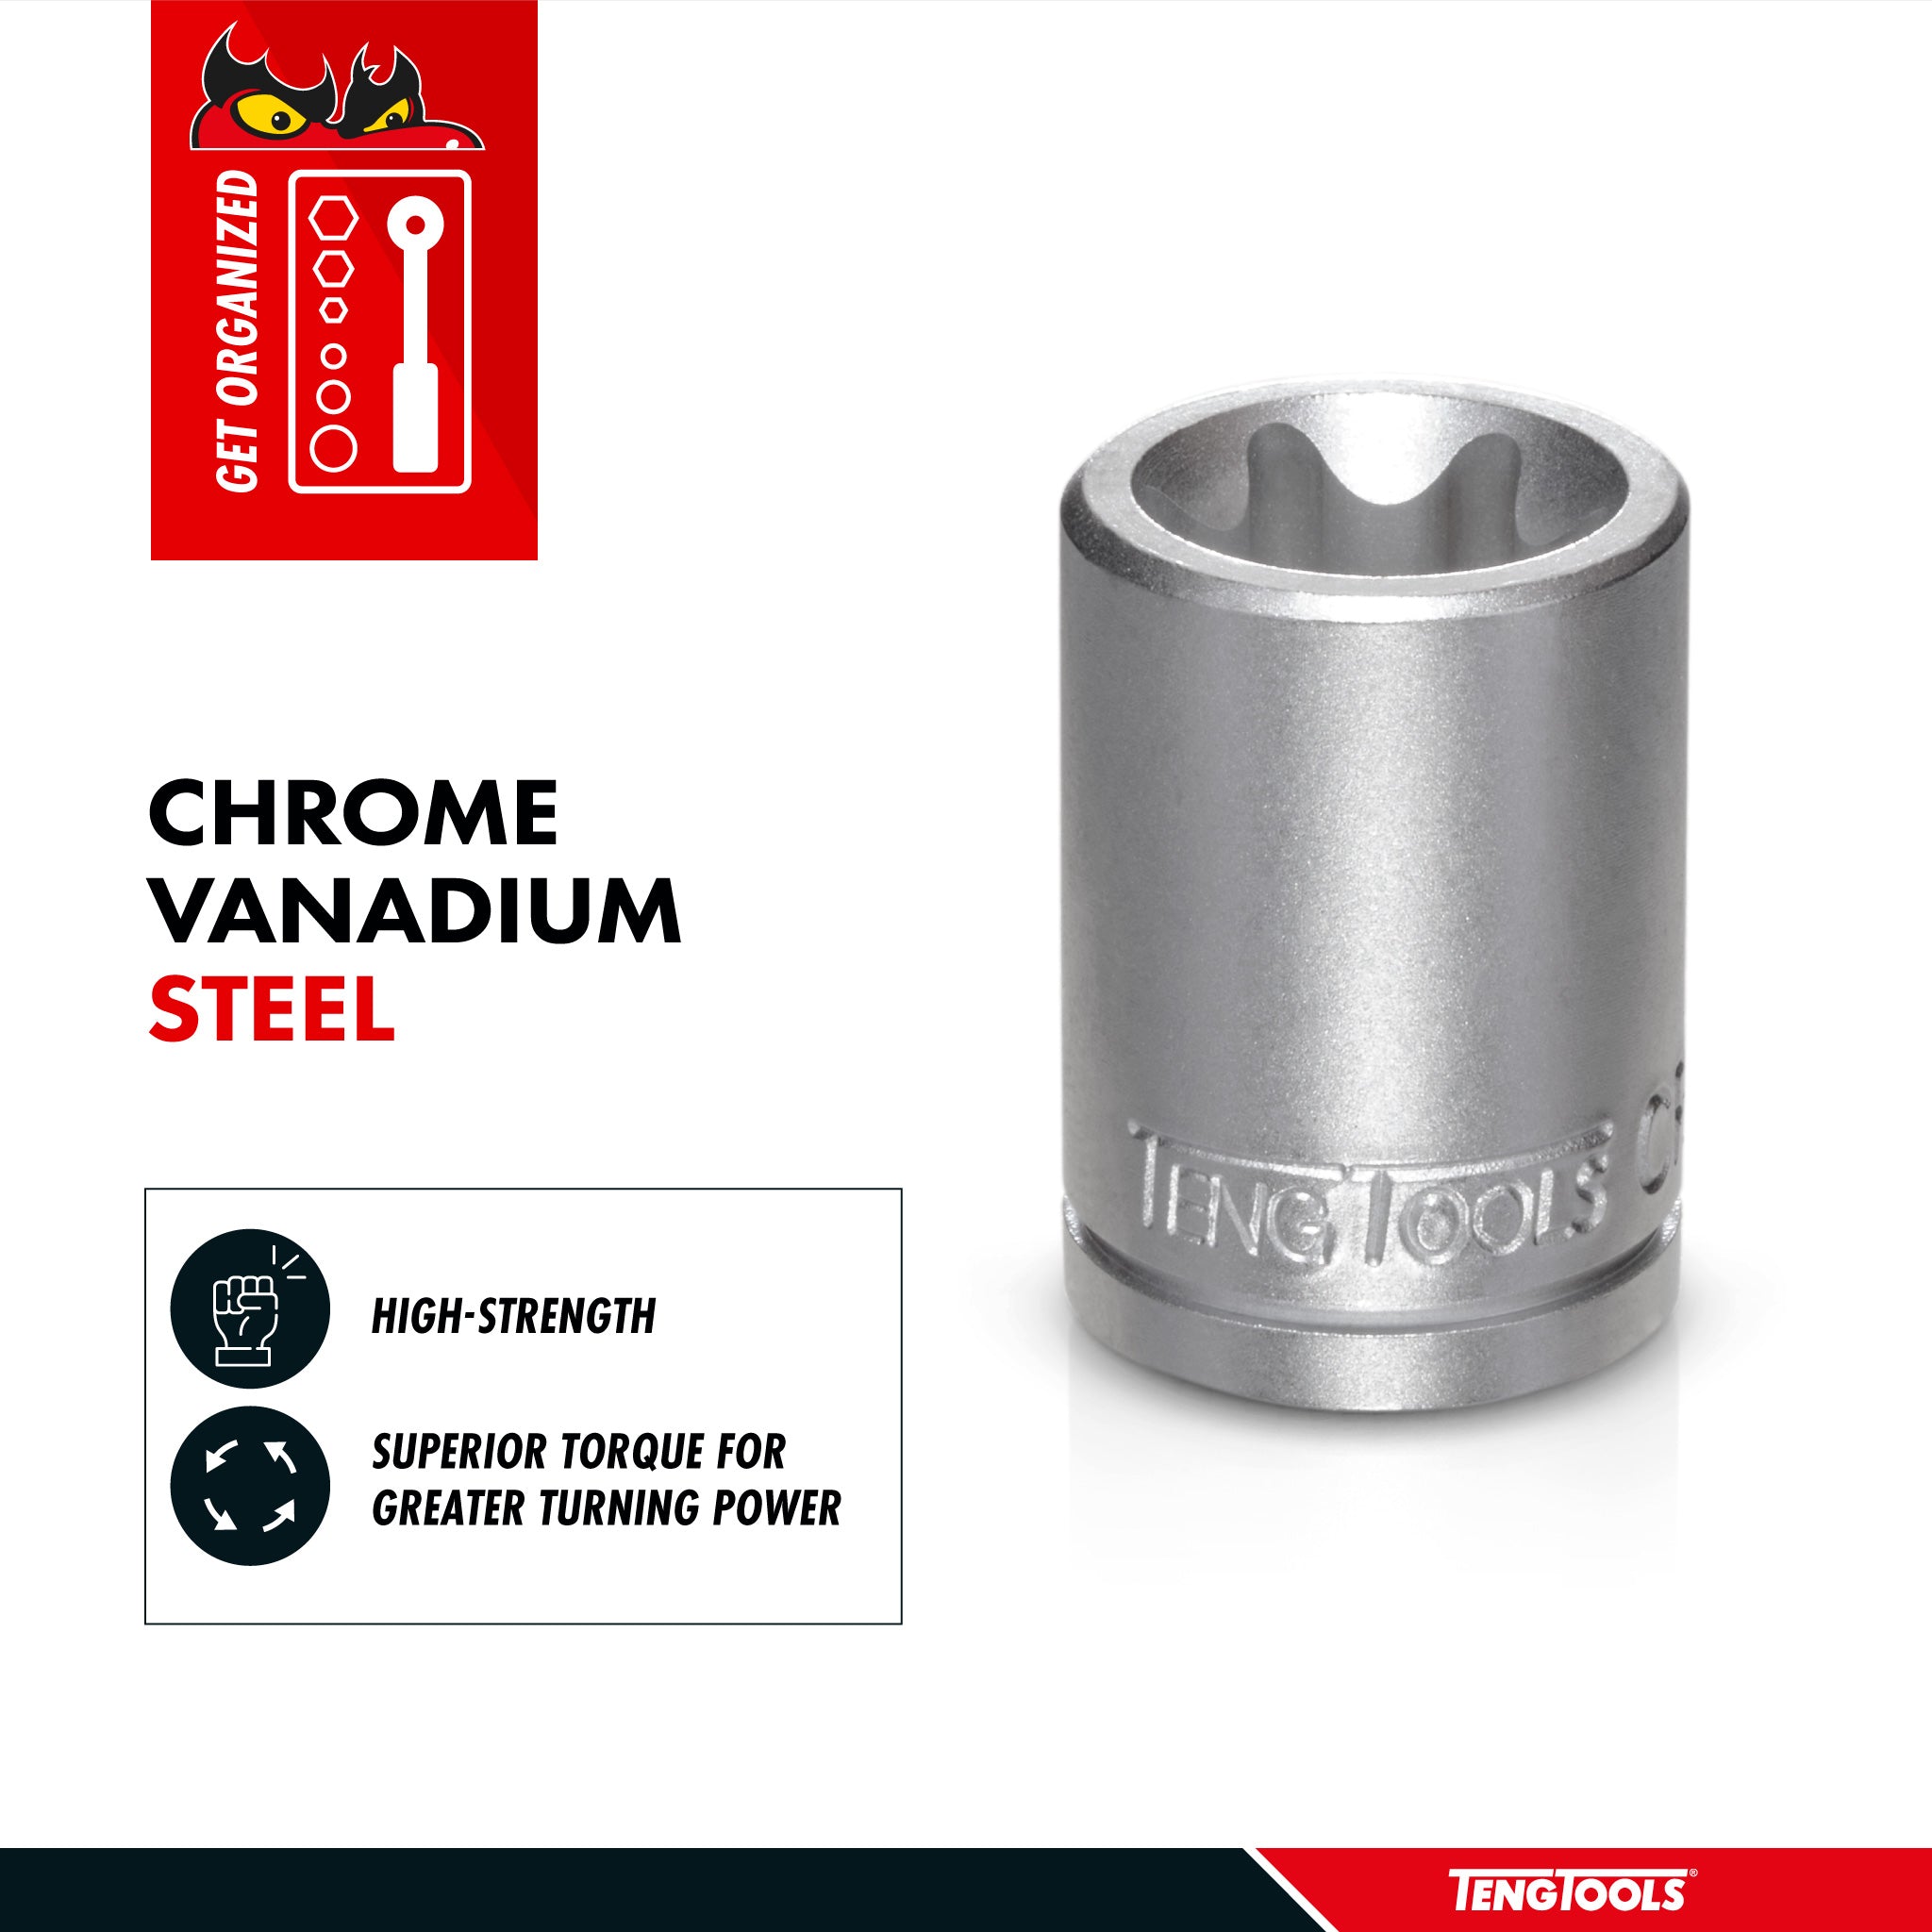 Teng Tools 3/8 Inch Drive Female E-Torx Star TX-E Chrome Vanadium Sockets